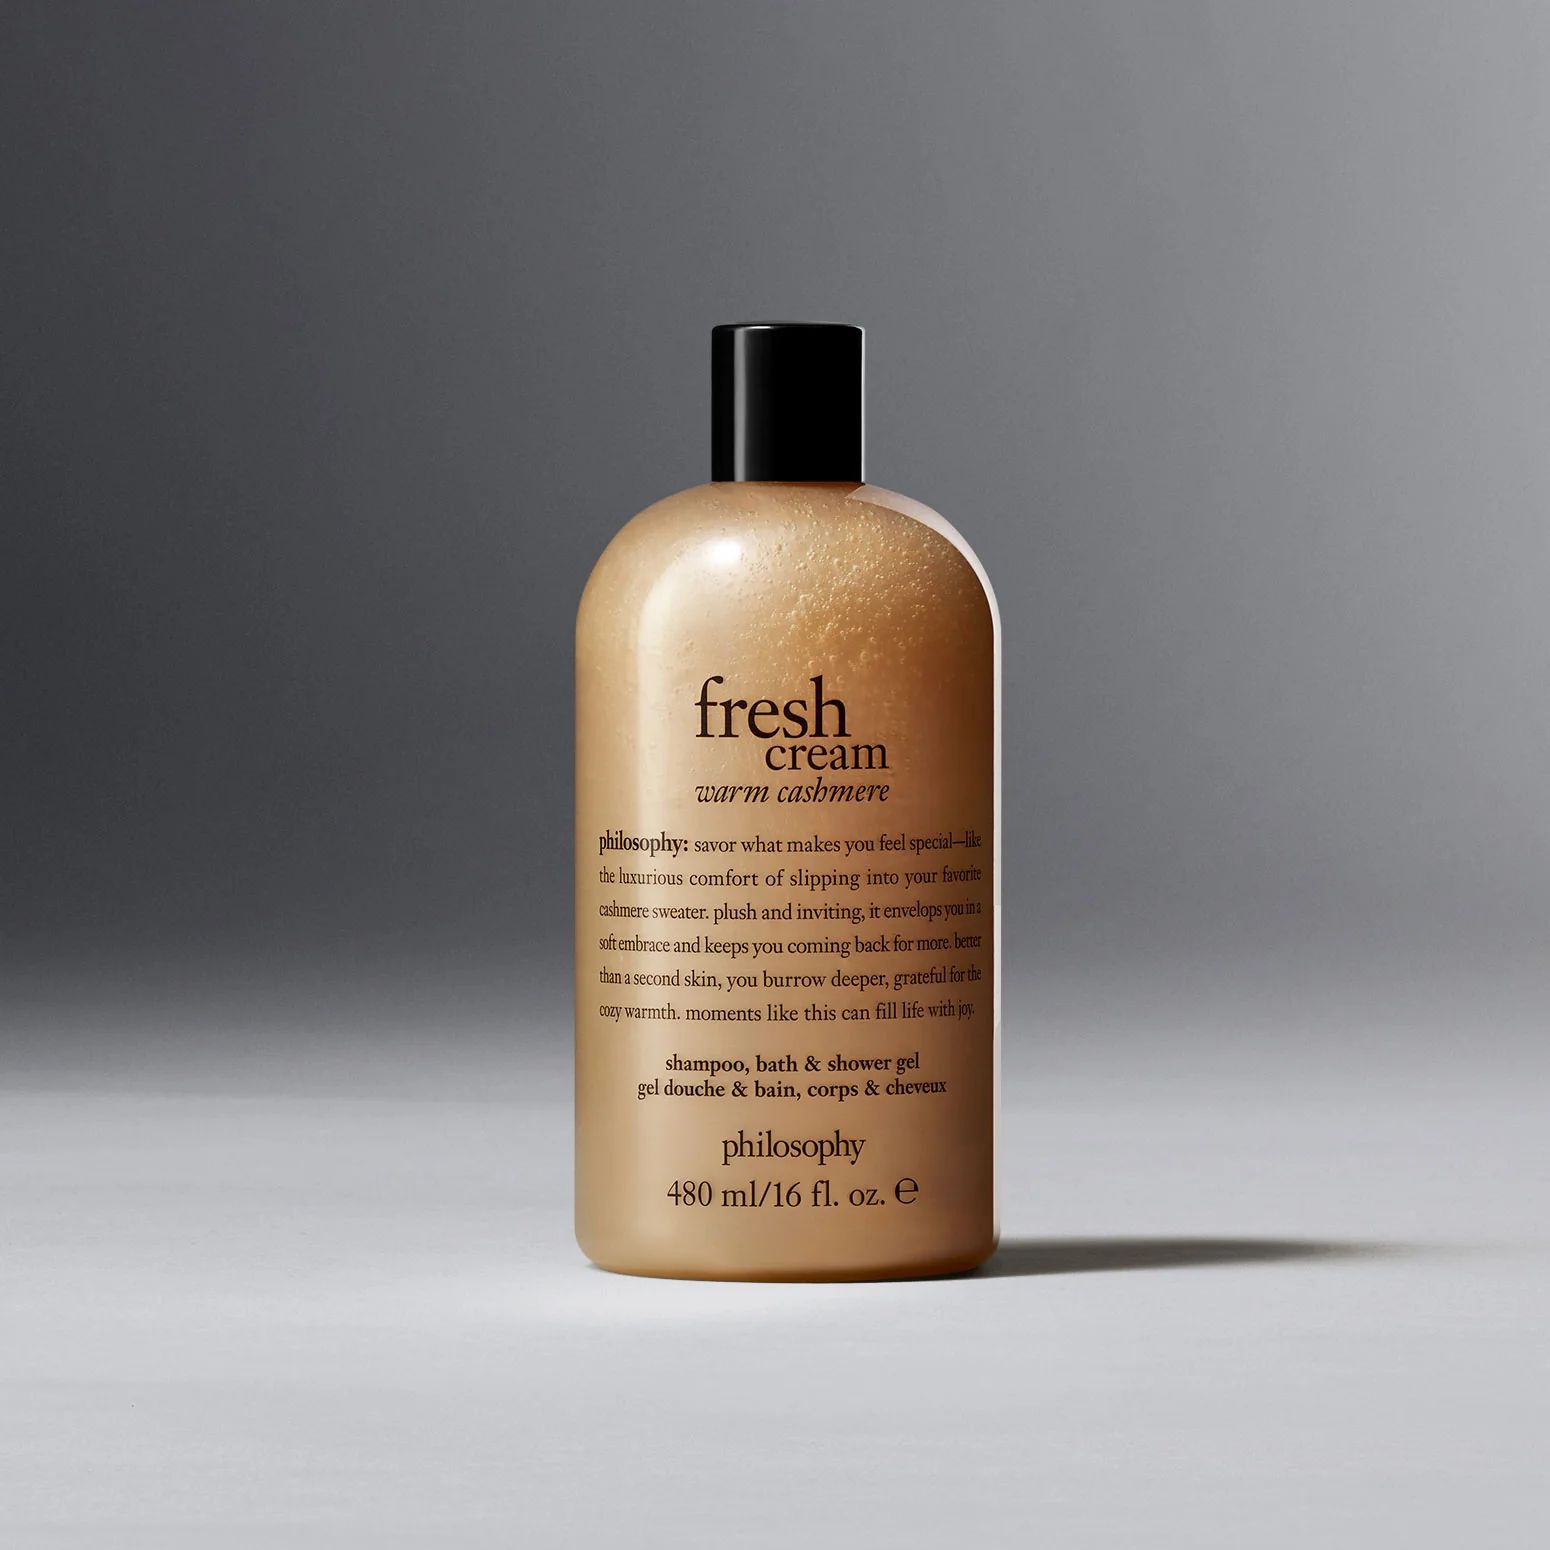 warm cashmere shampoo, bath & shower gel | Philosophy